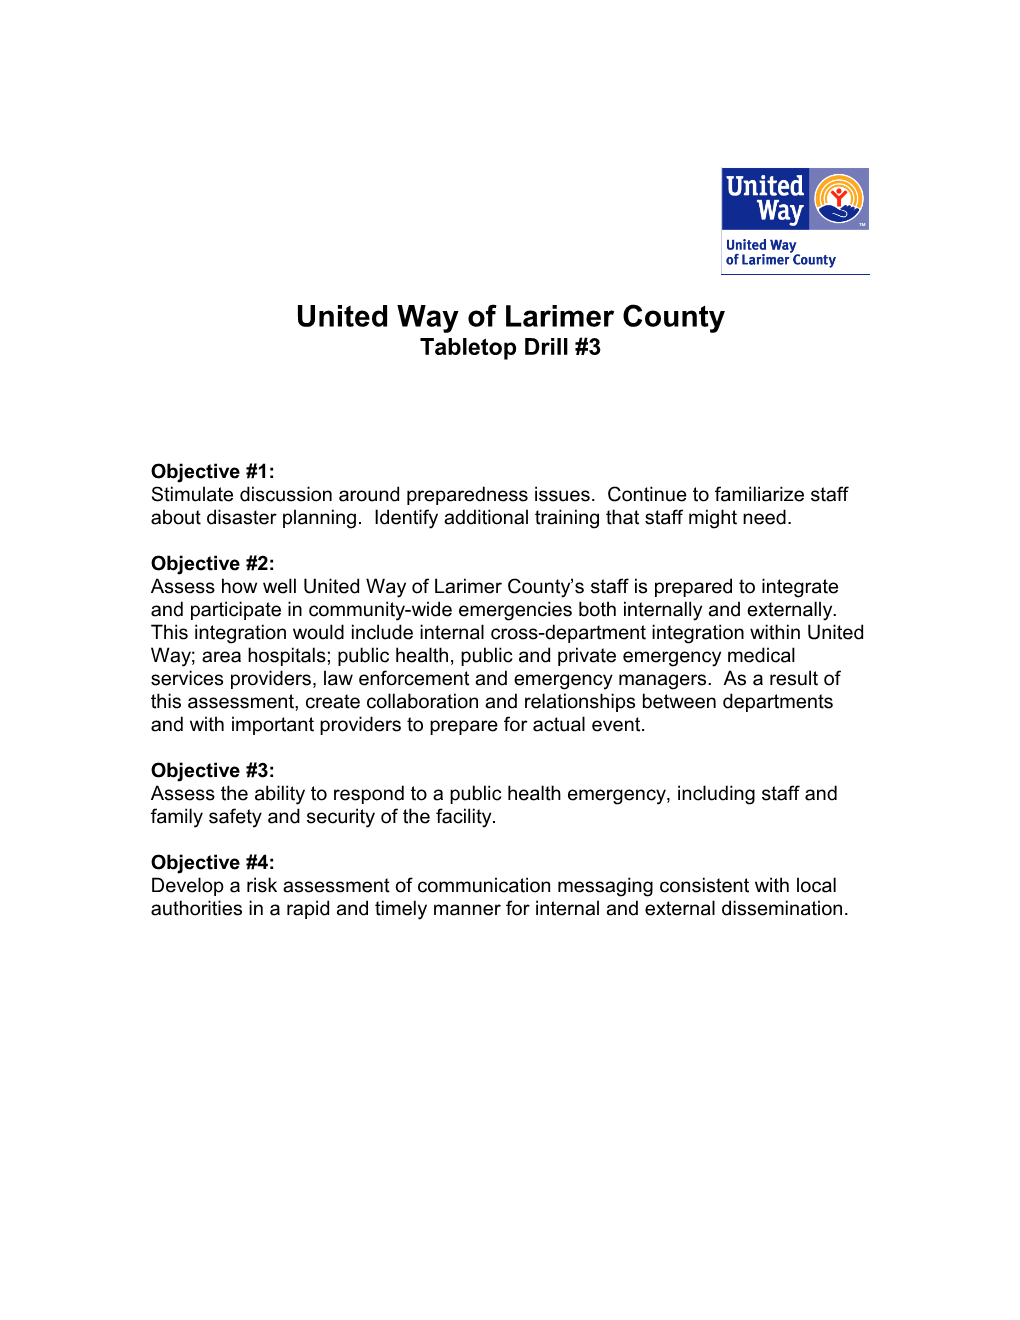 United Way of Larimer County s1